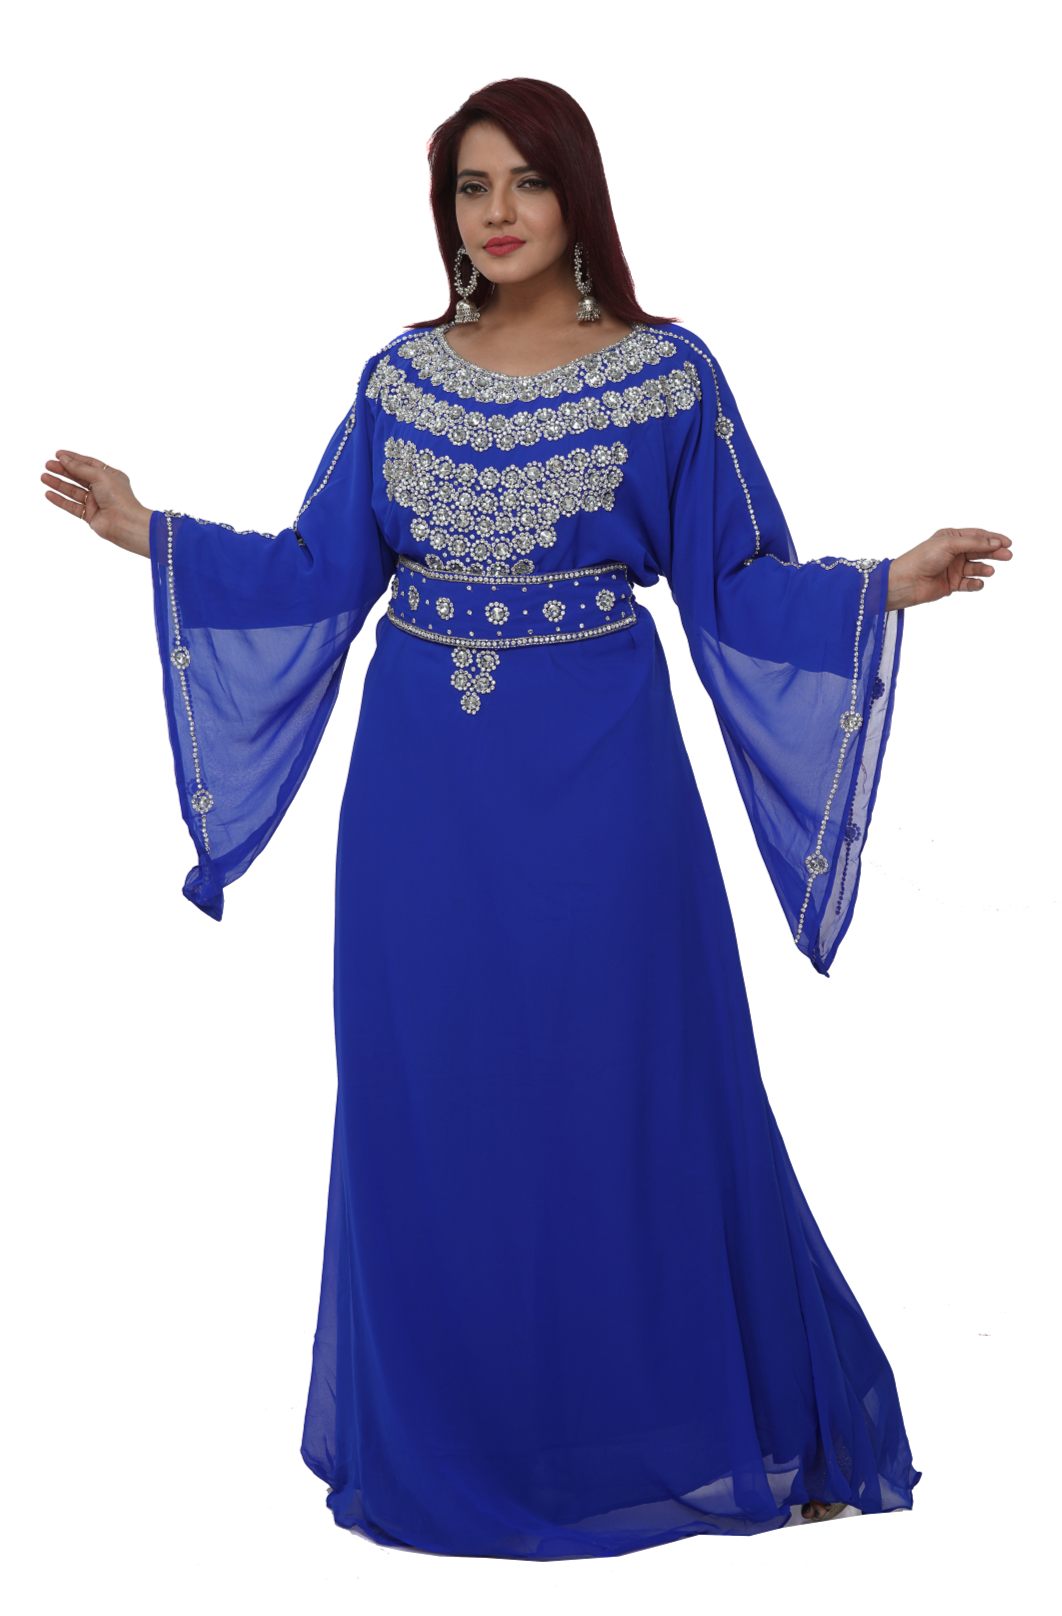 Abaya Moroccan Party Dress - Maxim Creation